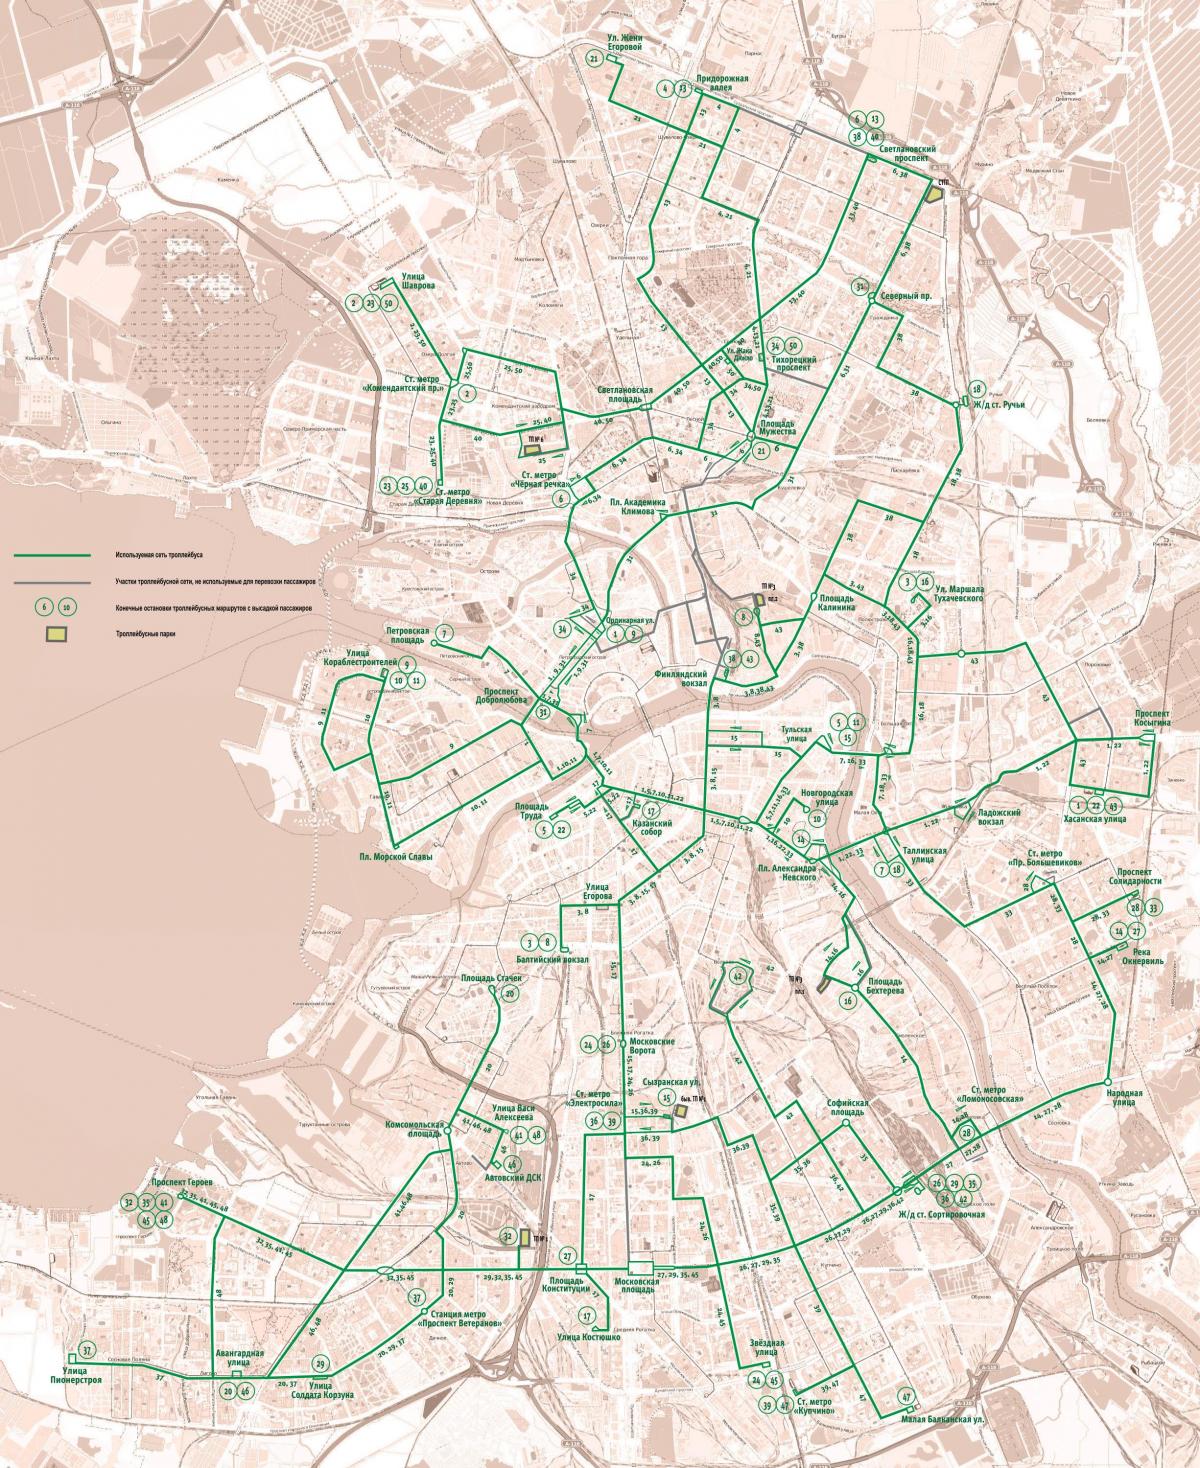 Plan des stations trolley de St Petersburg